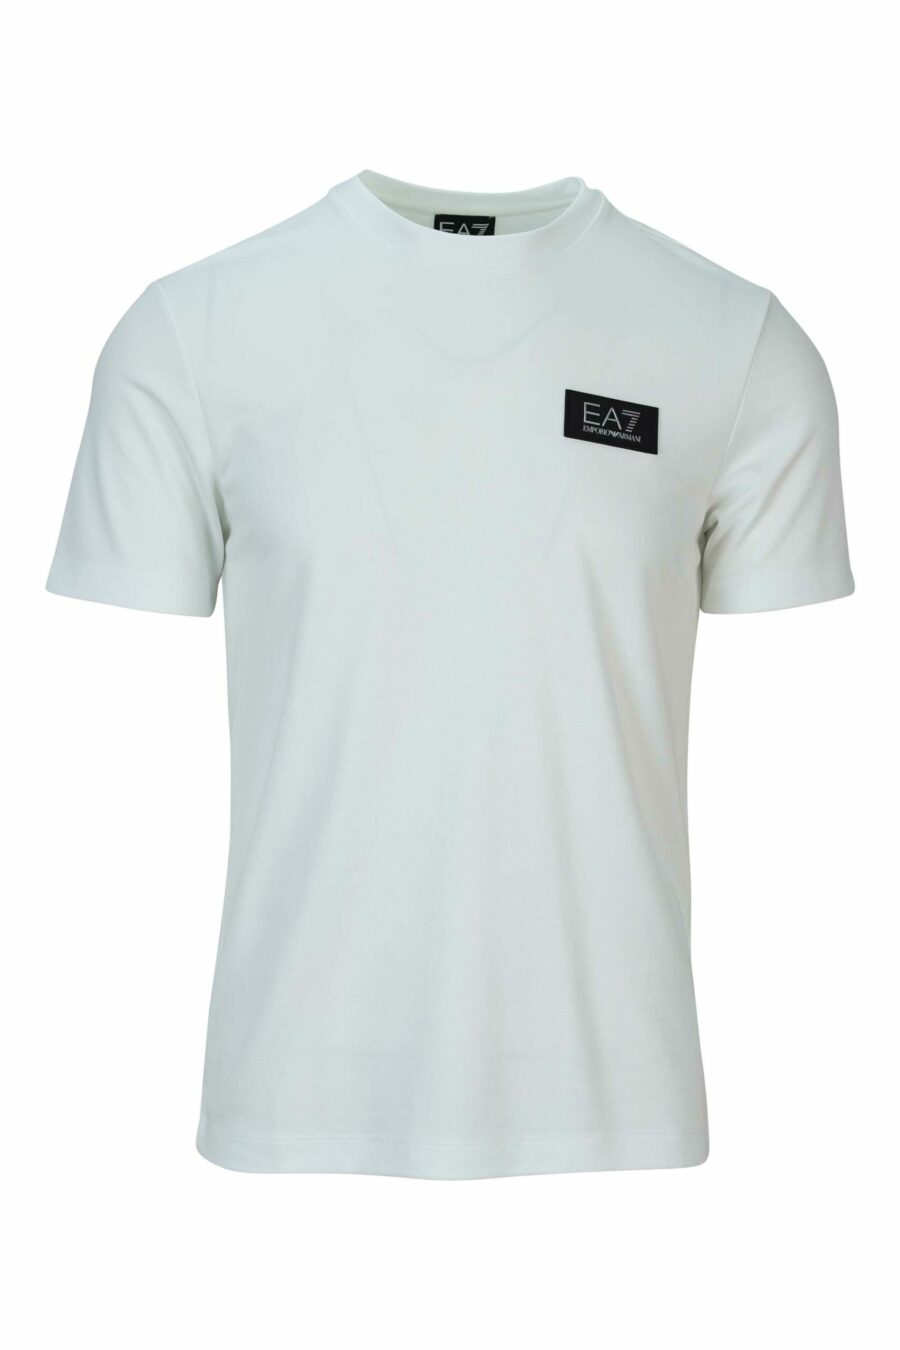 White oversize T-shirt with white "lux identity" mini-logo on black plate - 8058947508495 scaled